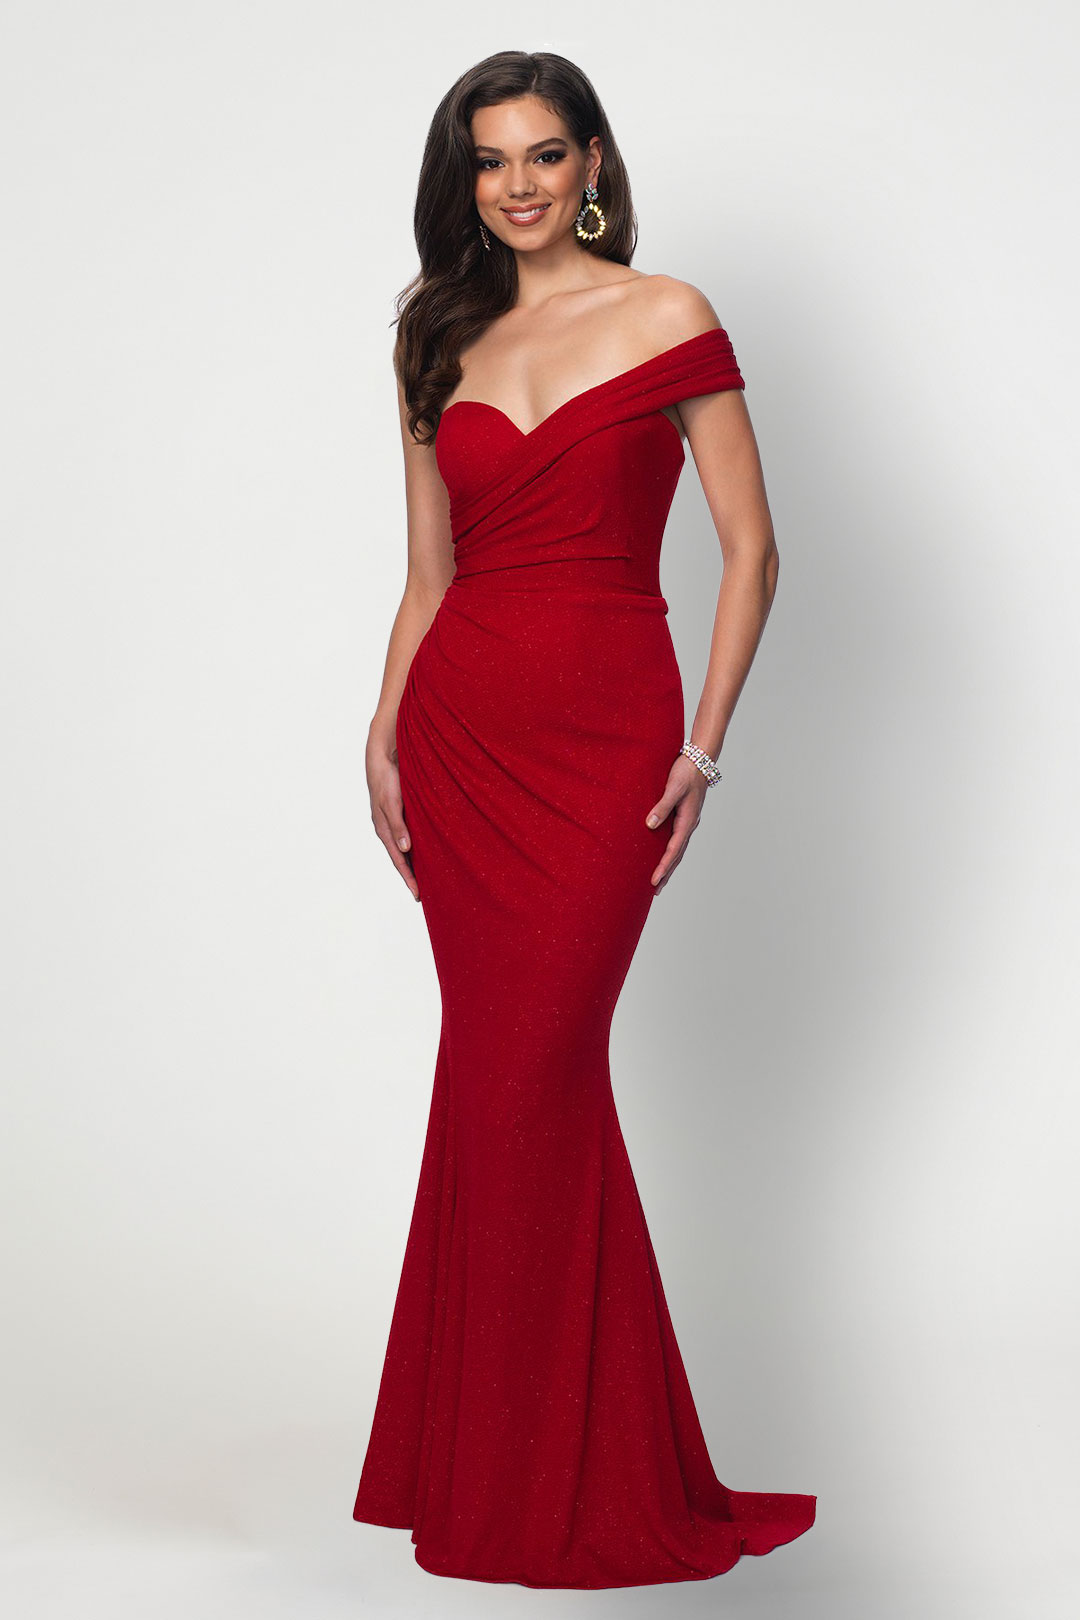 Red Glitter Gown - Blush Prom Dress Rental